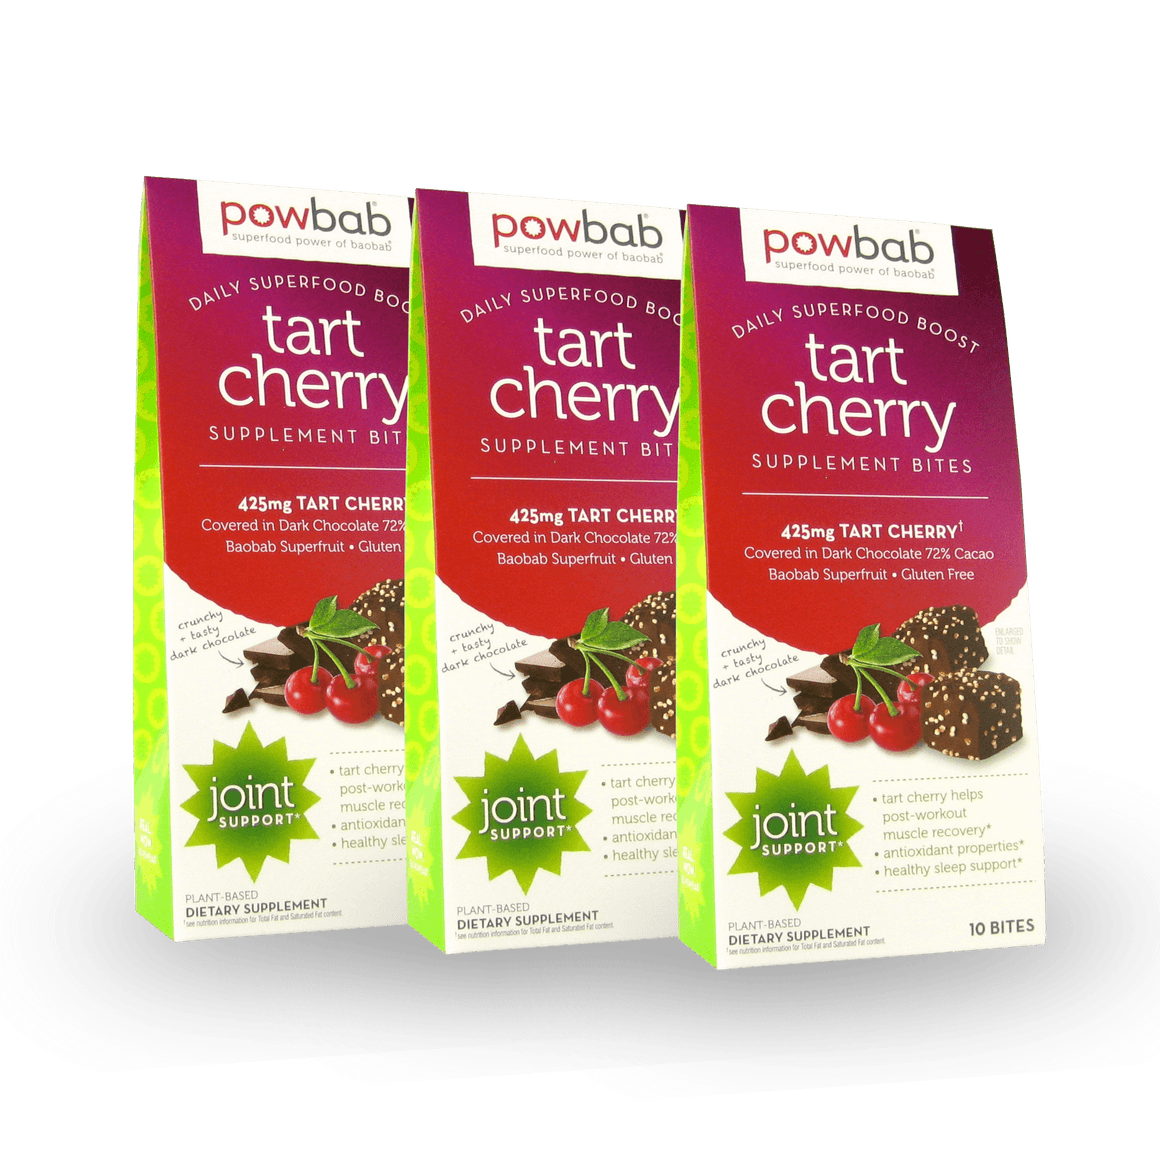 powbab tart cherry supplement bites